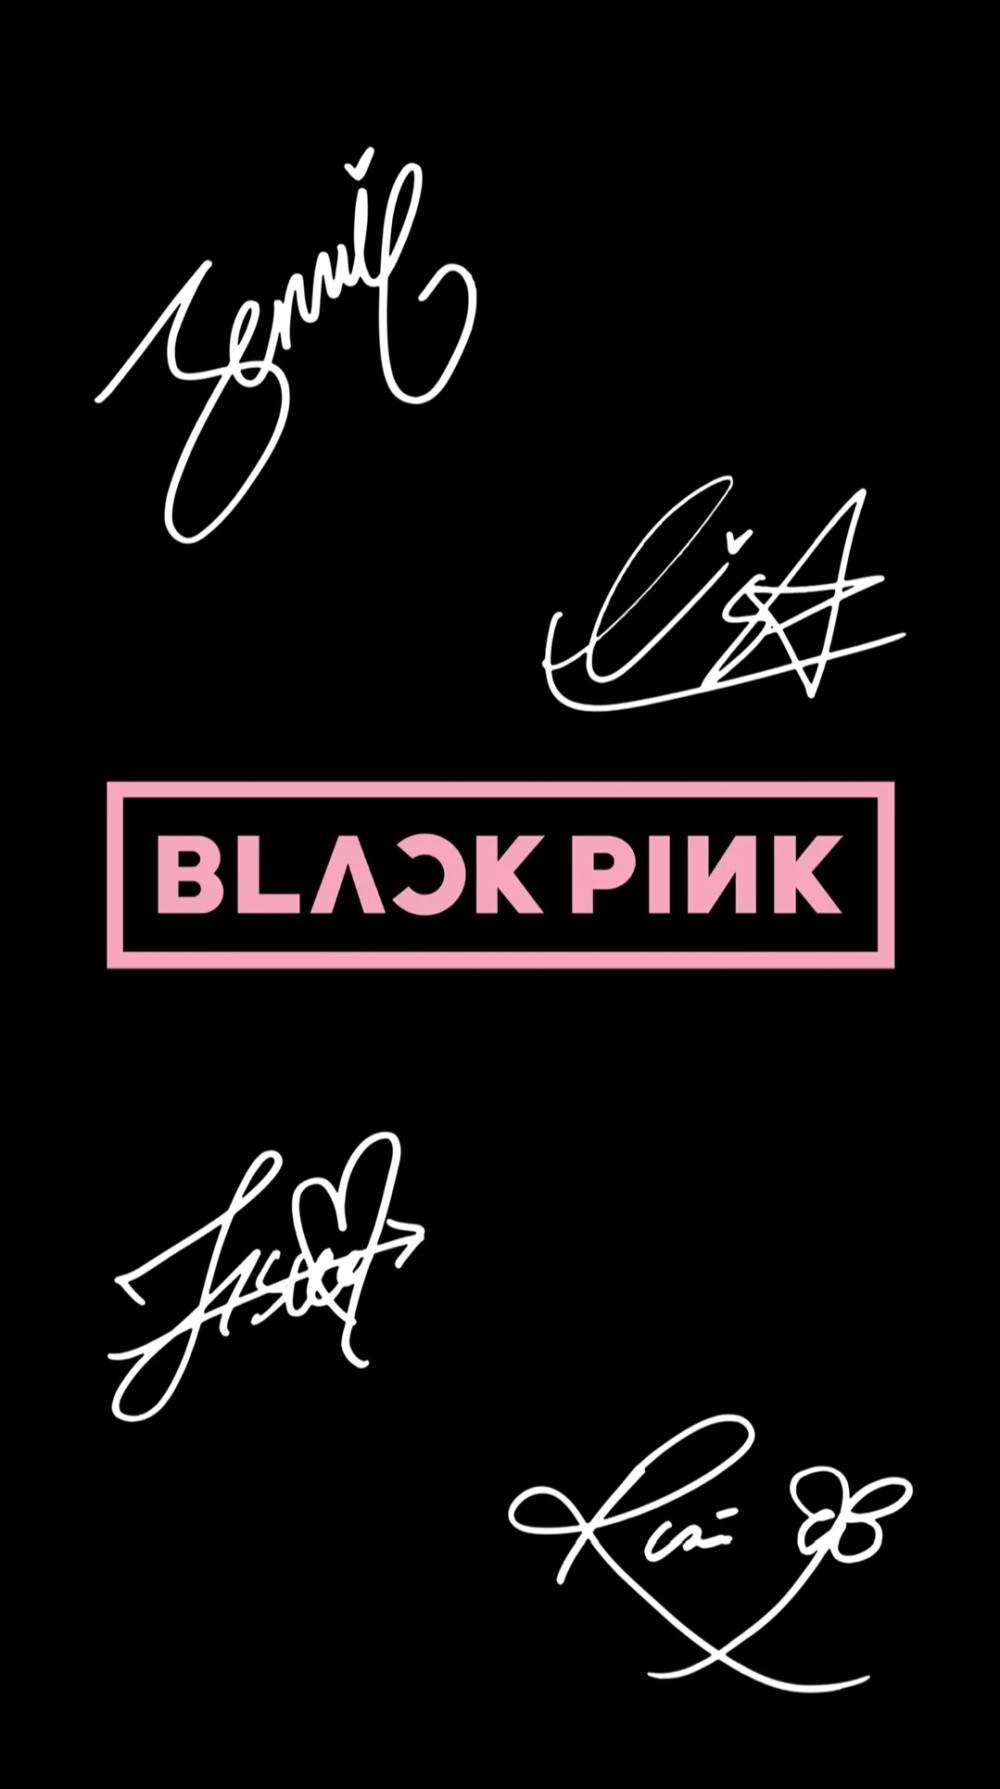 blackpink照片logo图片